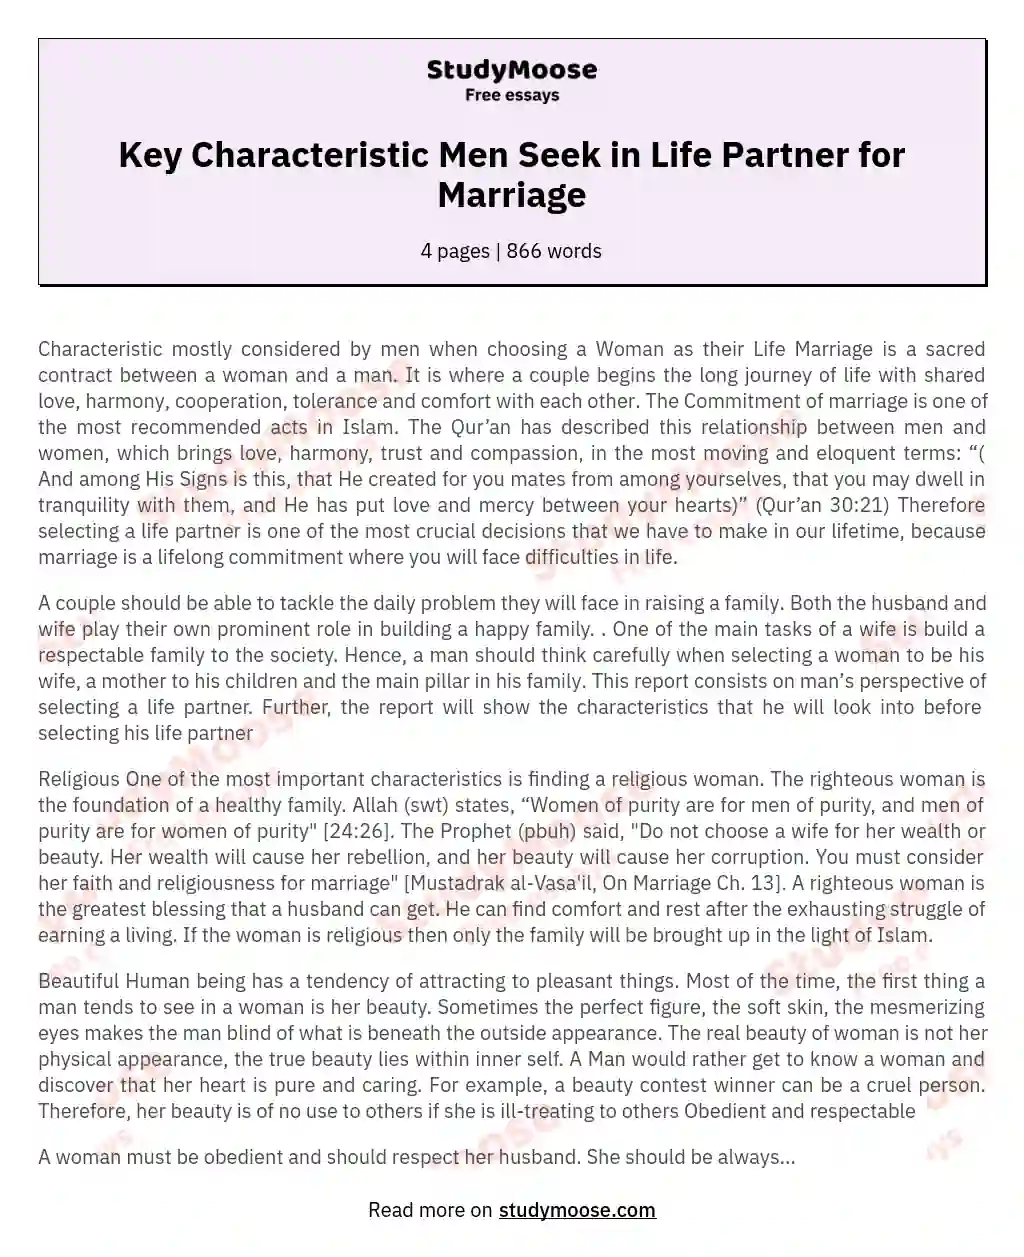 Key Characteristic Men Seek in Life Partner for Marriage essay